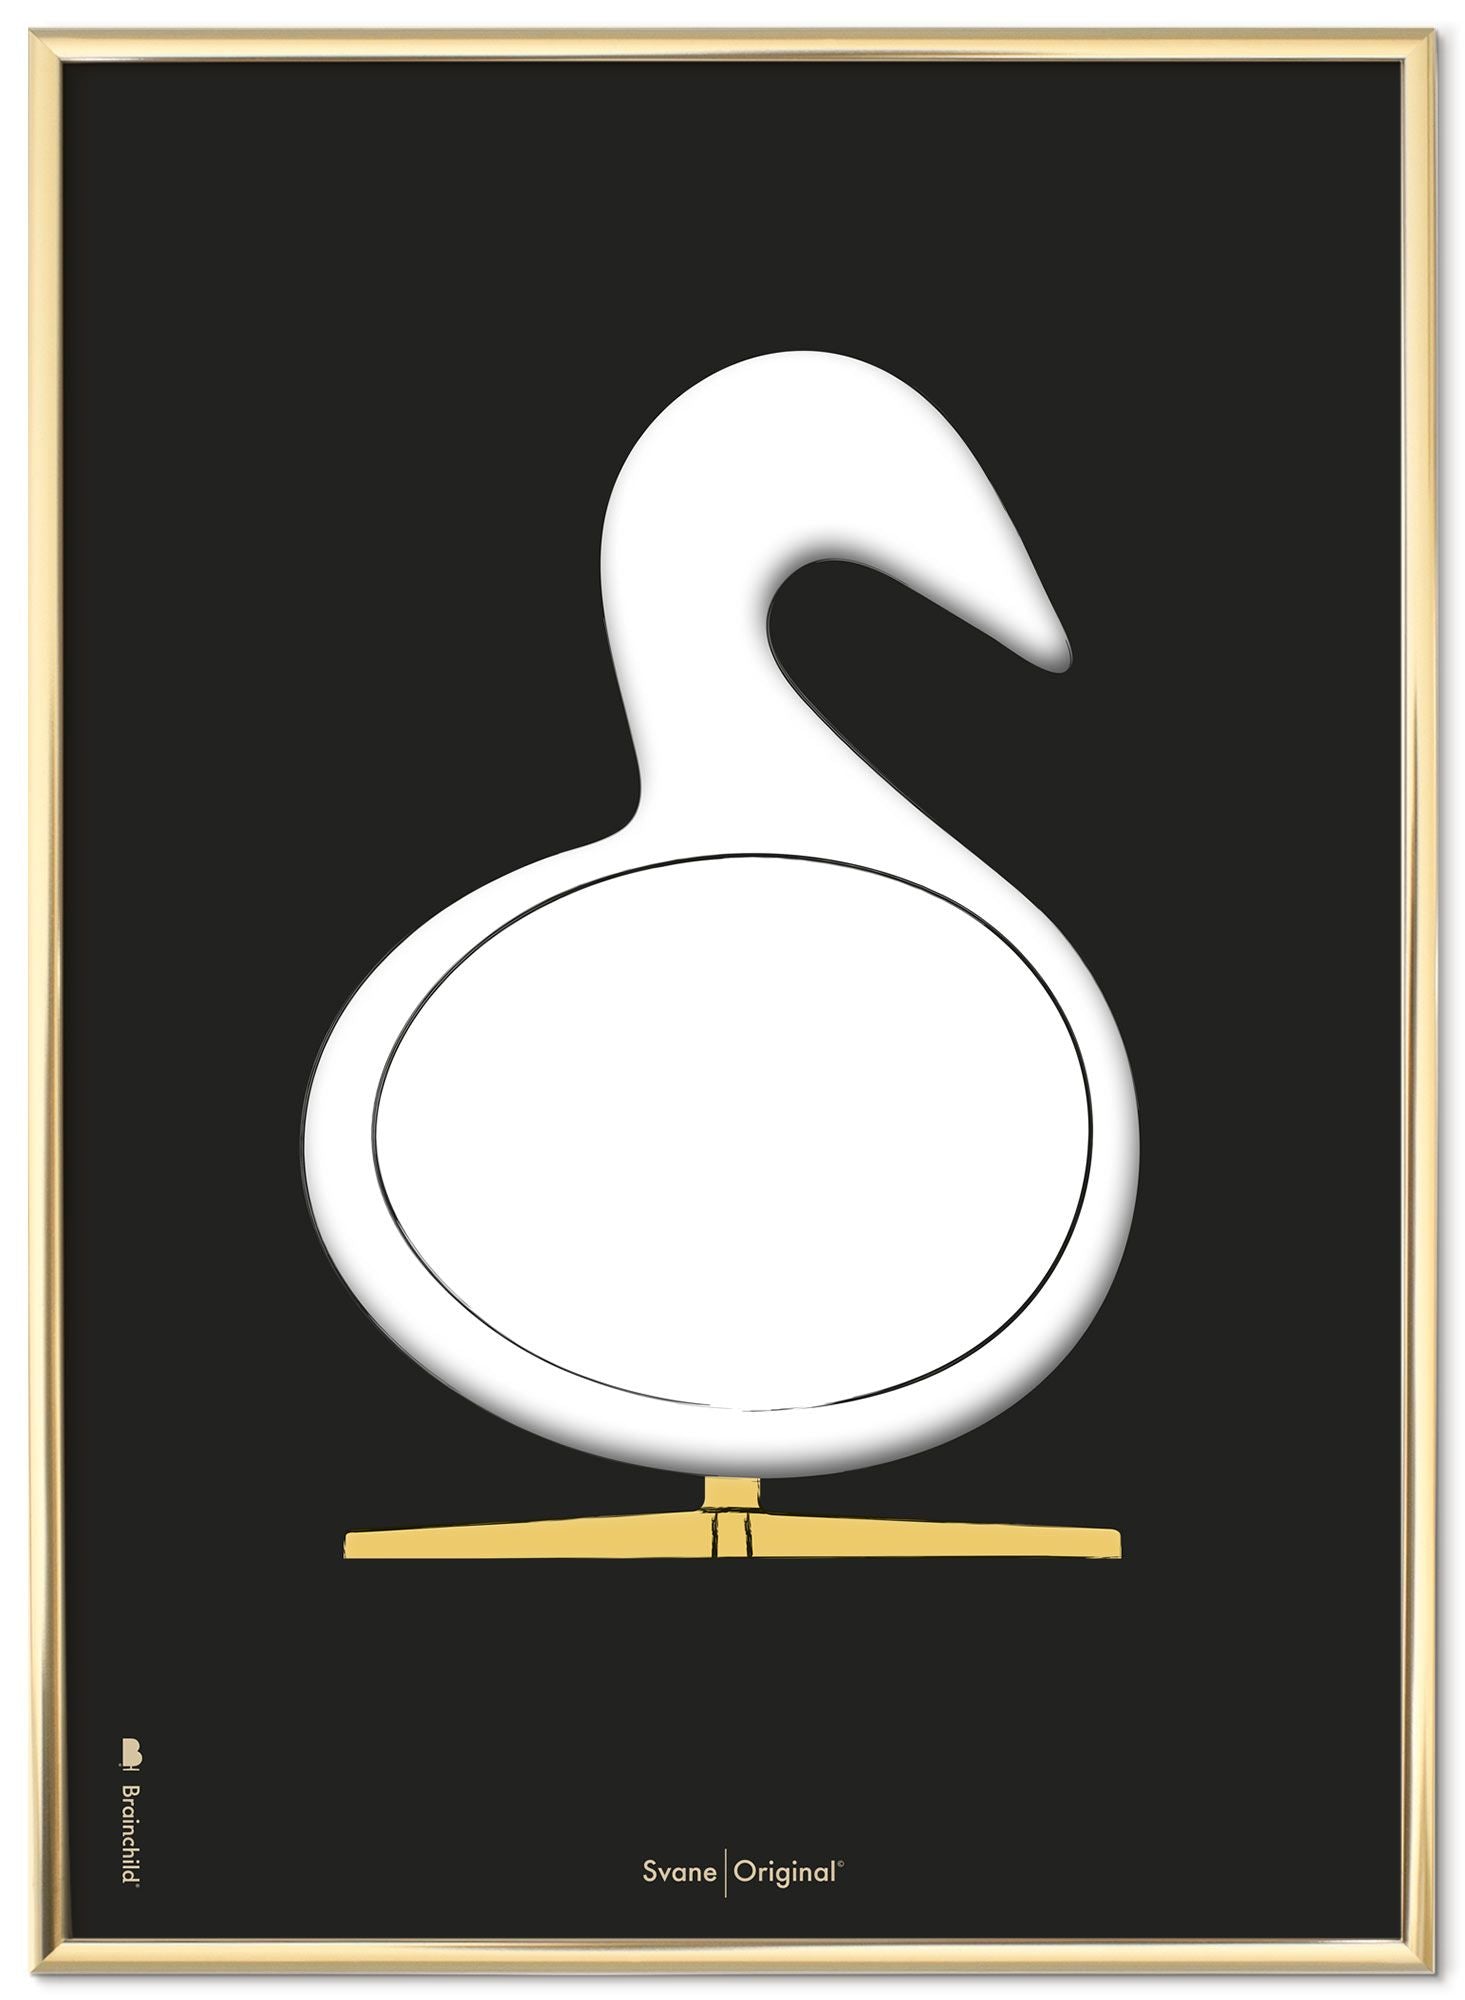 Brainchild Swan Design Sketch Poster Frame Made Of Brass Colored Metal 50x70 Cm, Black Background